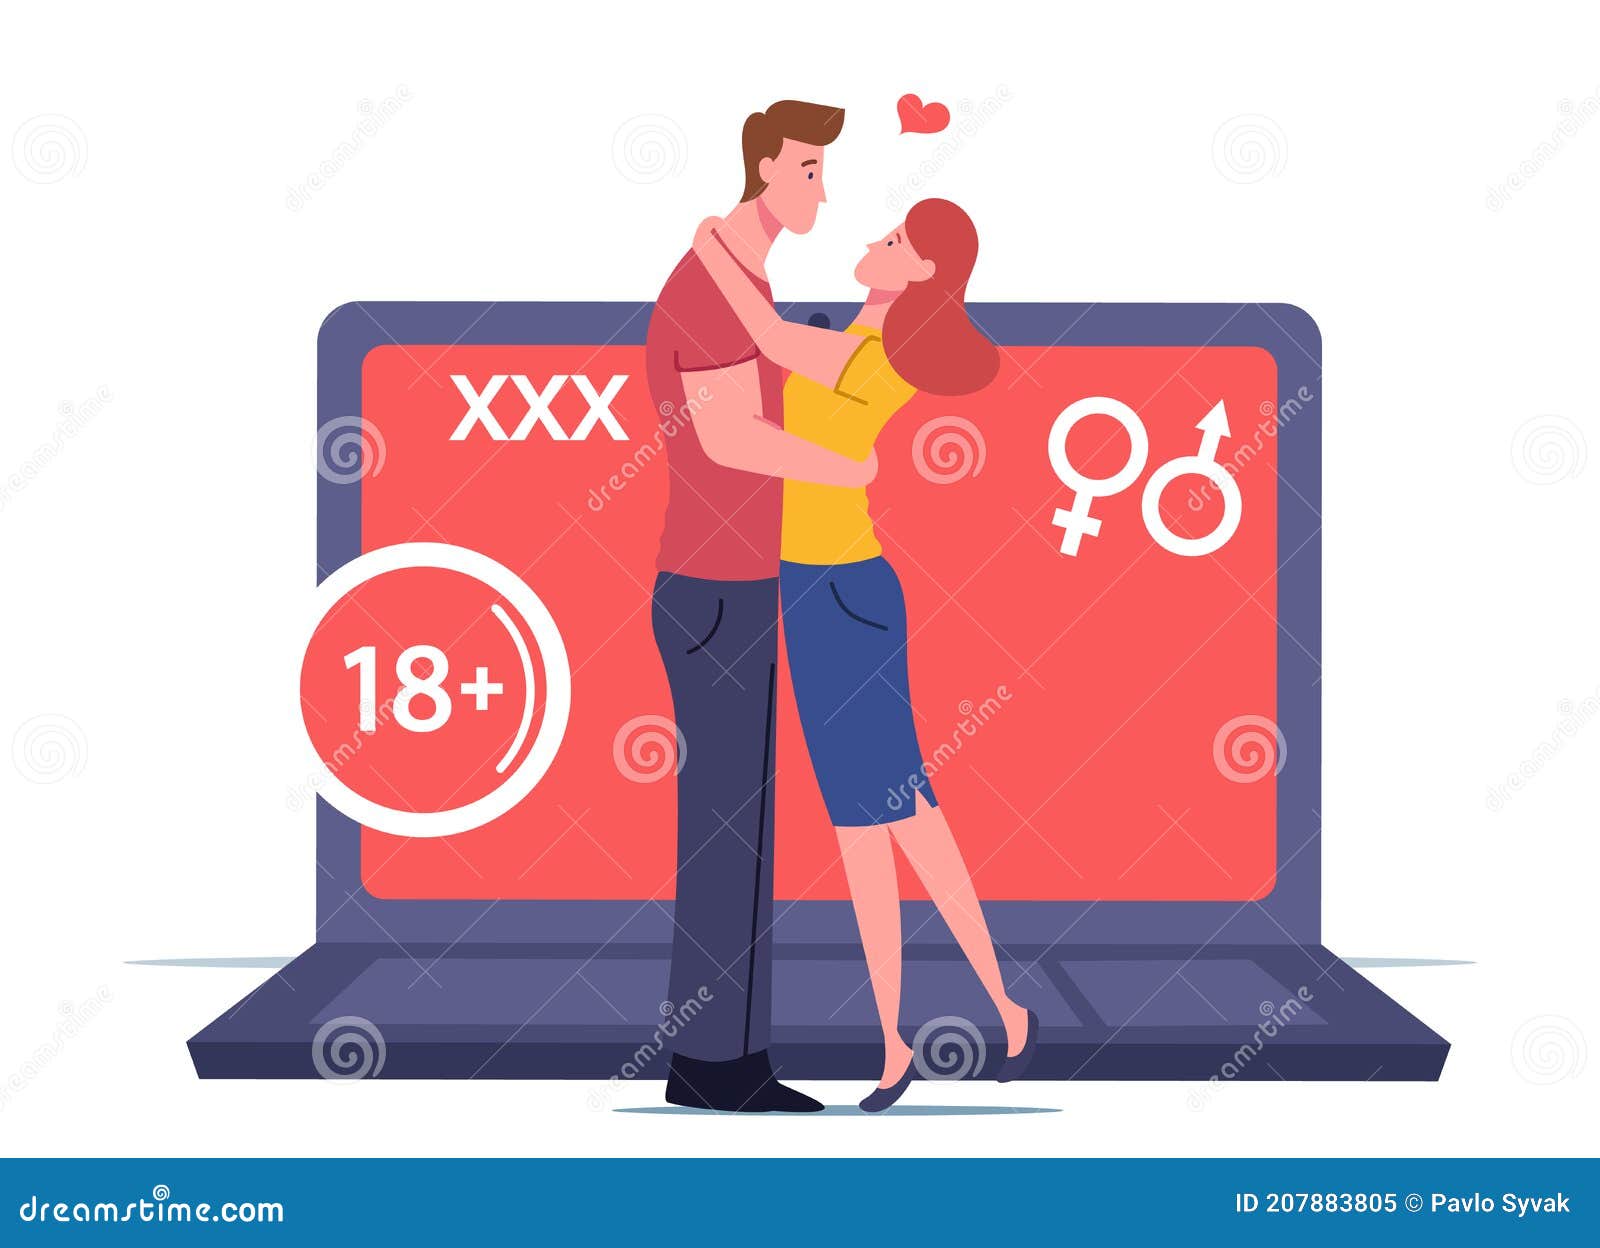 Xxx Dating App